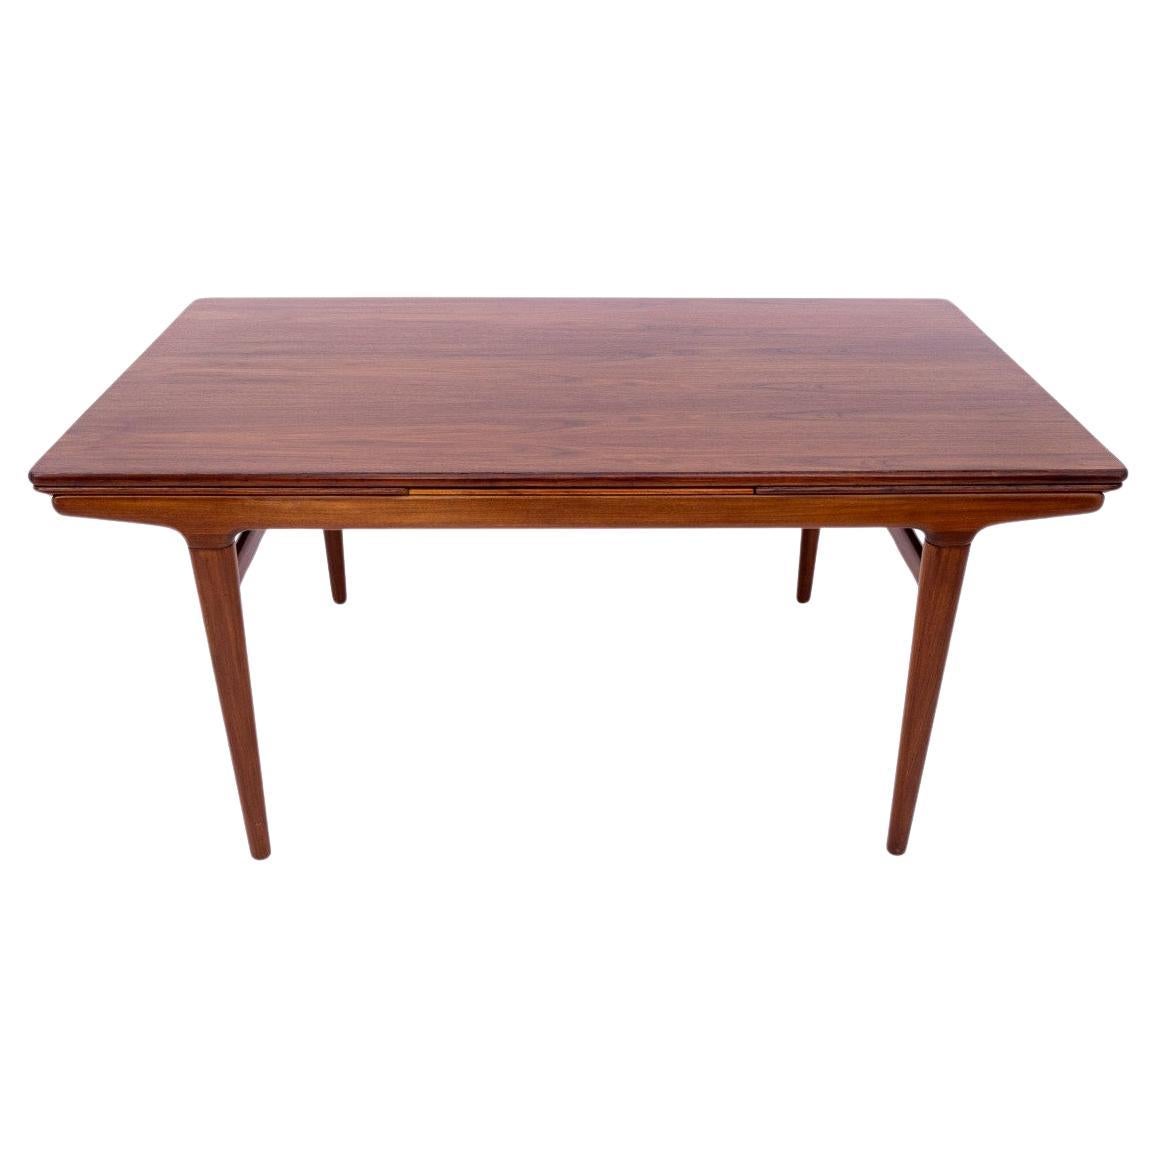 Rectangular table, Denmark, 1960s. After renovation. For Sale